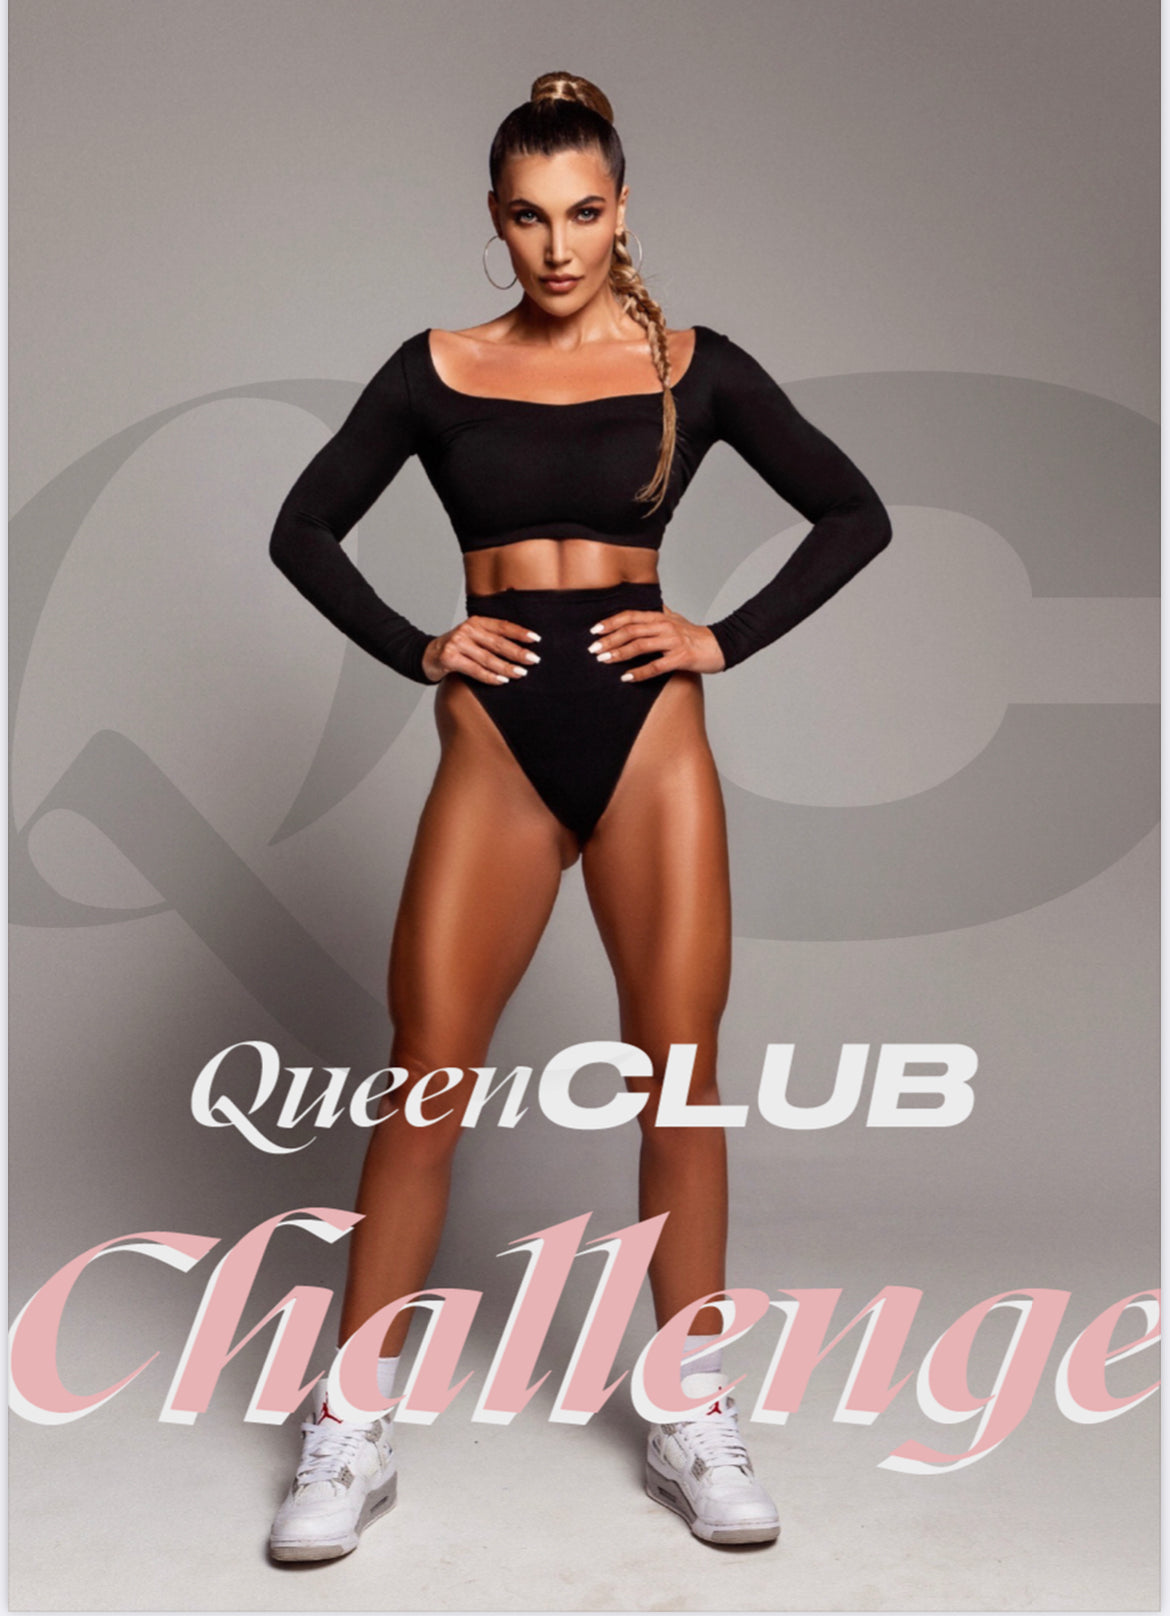 QueenCLUB CHALLENGE 1